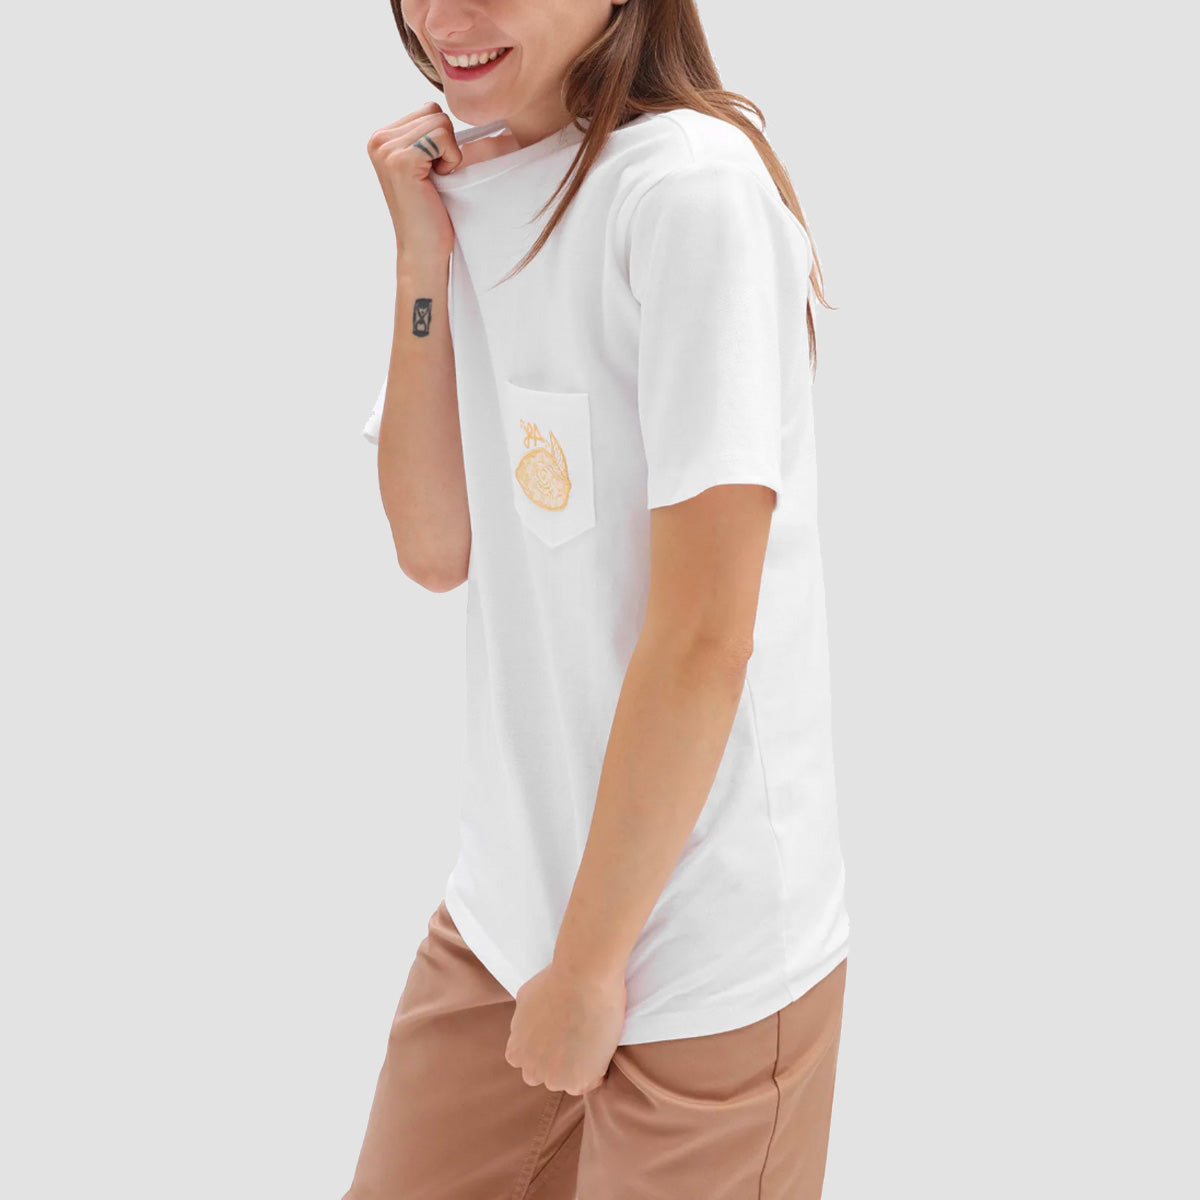 Vans Lizzie Armanto OTW Pocket T-Shirt White - Womens